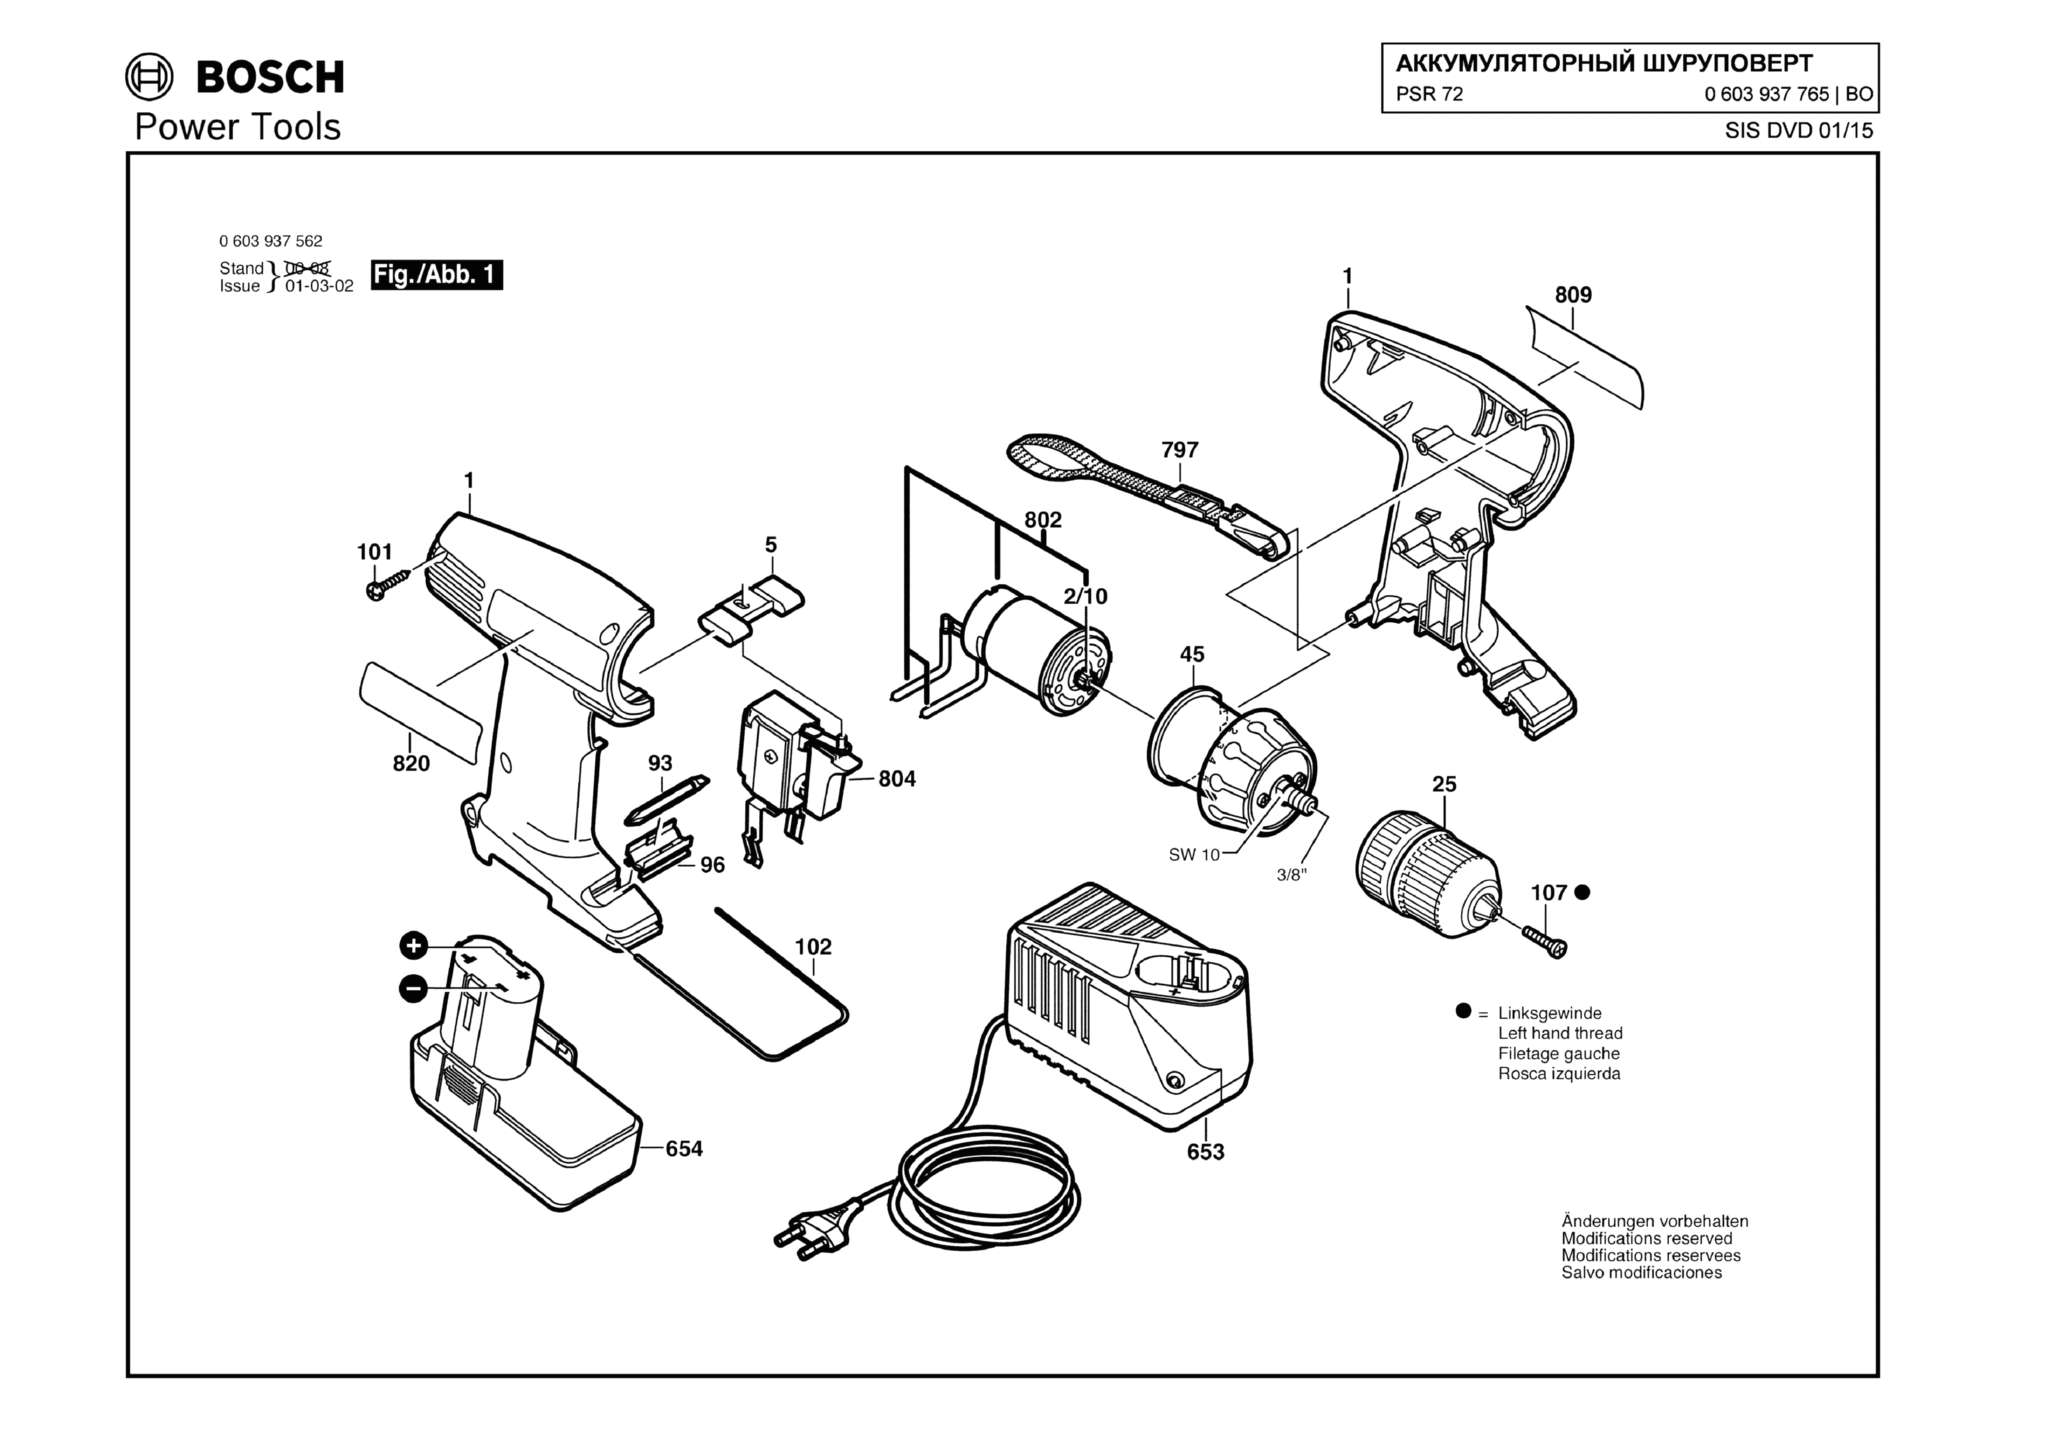 Запчасти, схема и деталировка Bosch PSR 72 (ТИП 0603937765)